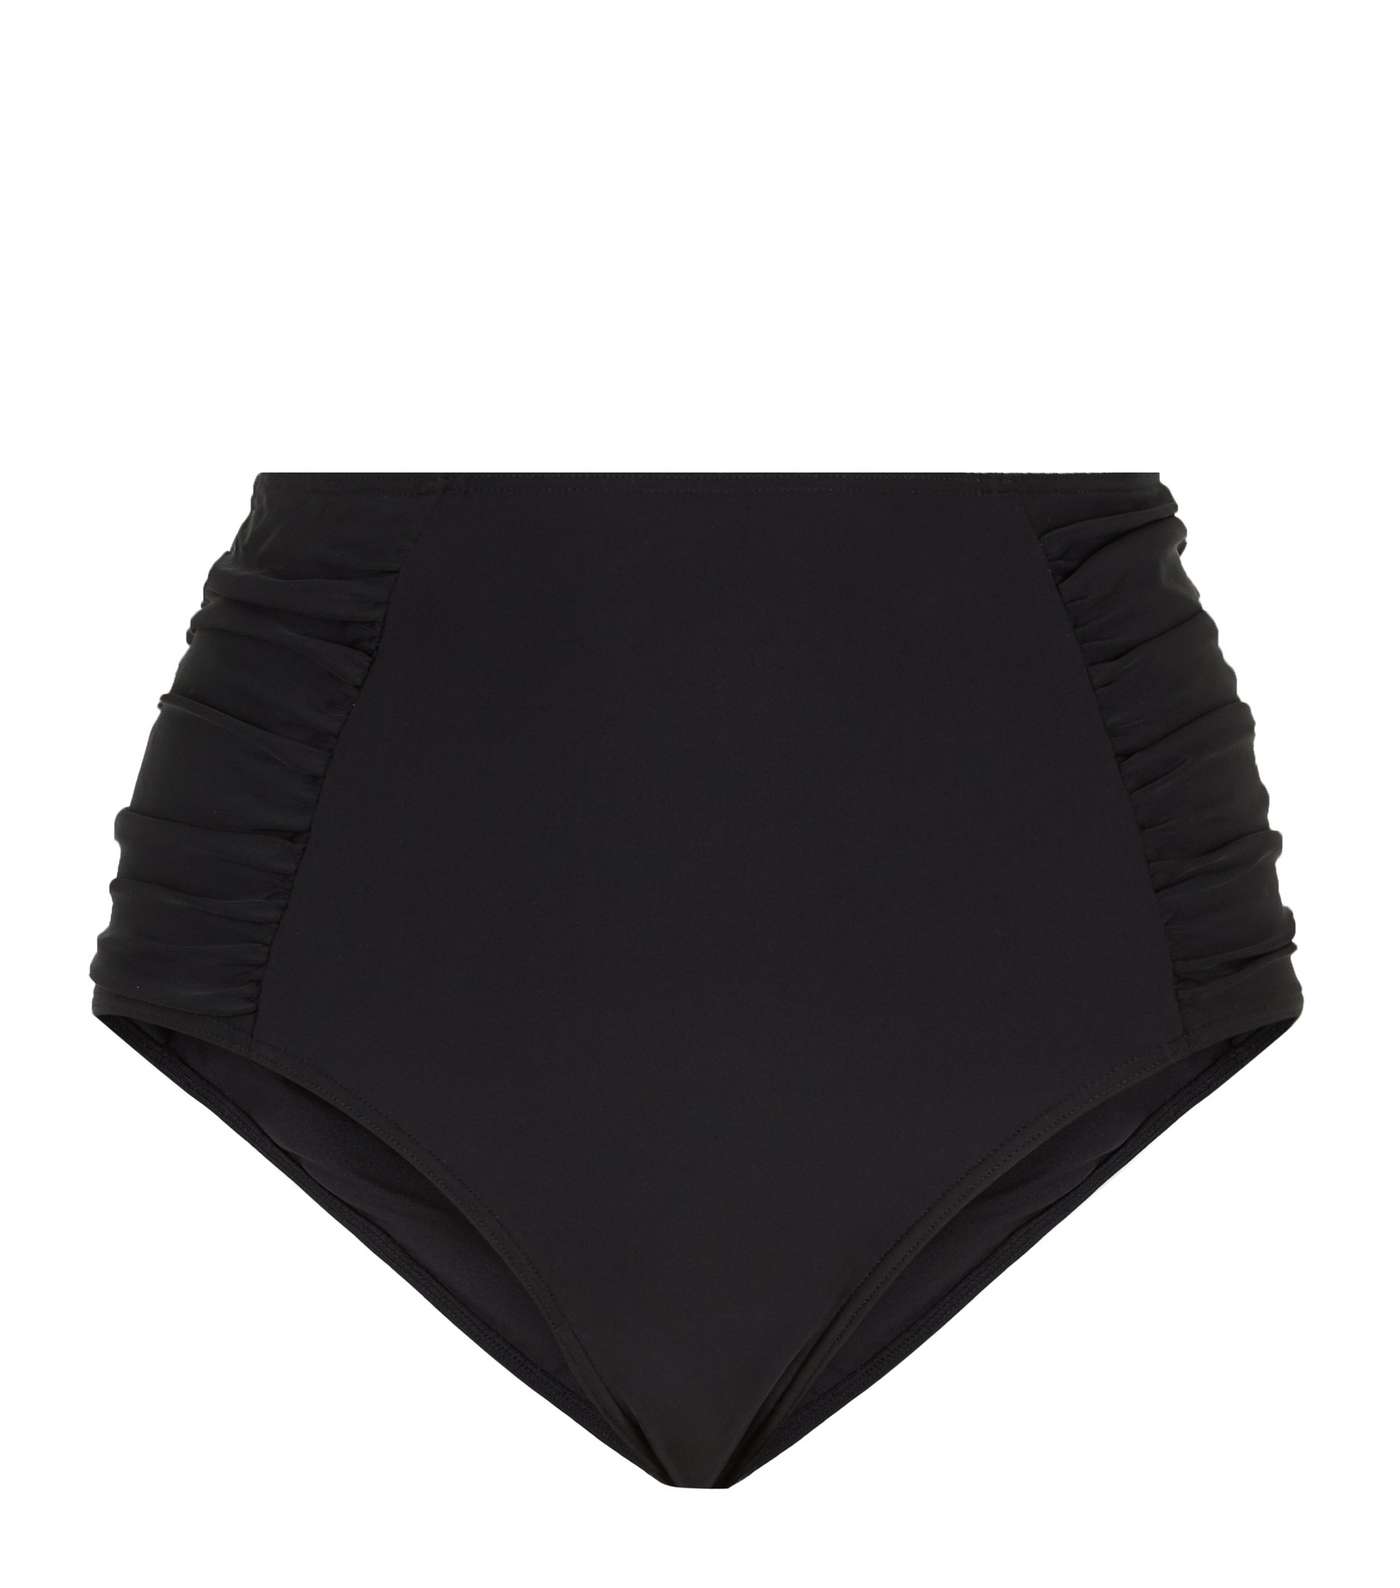 Black Ruched 'Lift & Shape' High Waist Bikini Bottoms Image 3